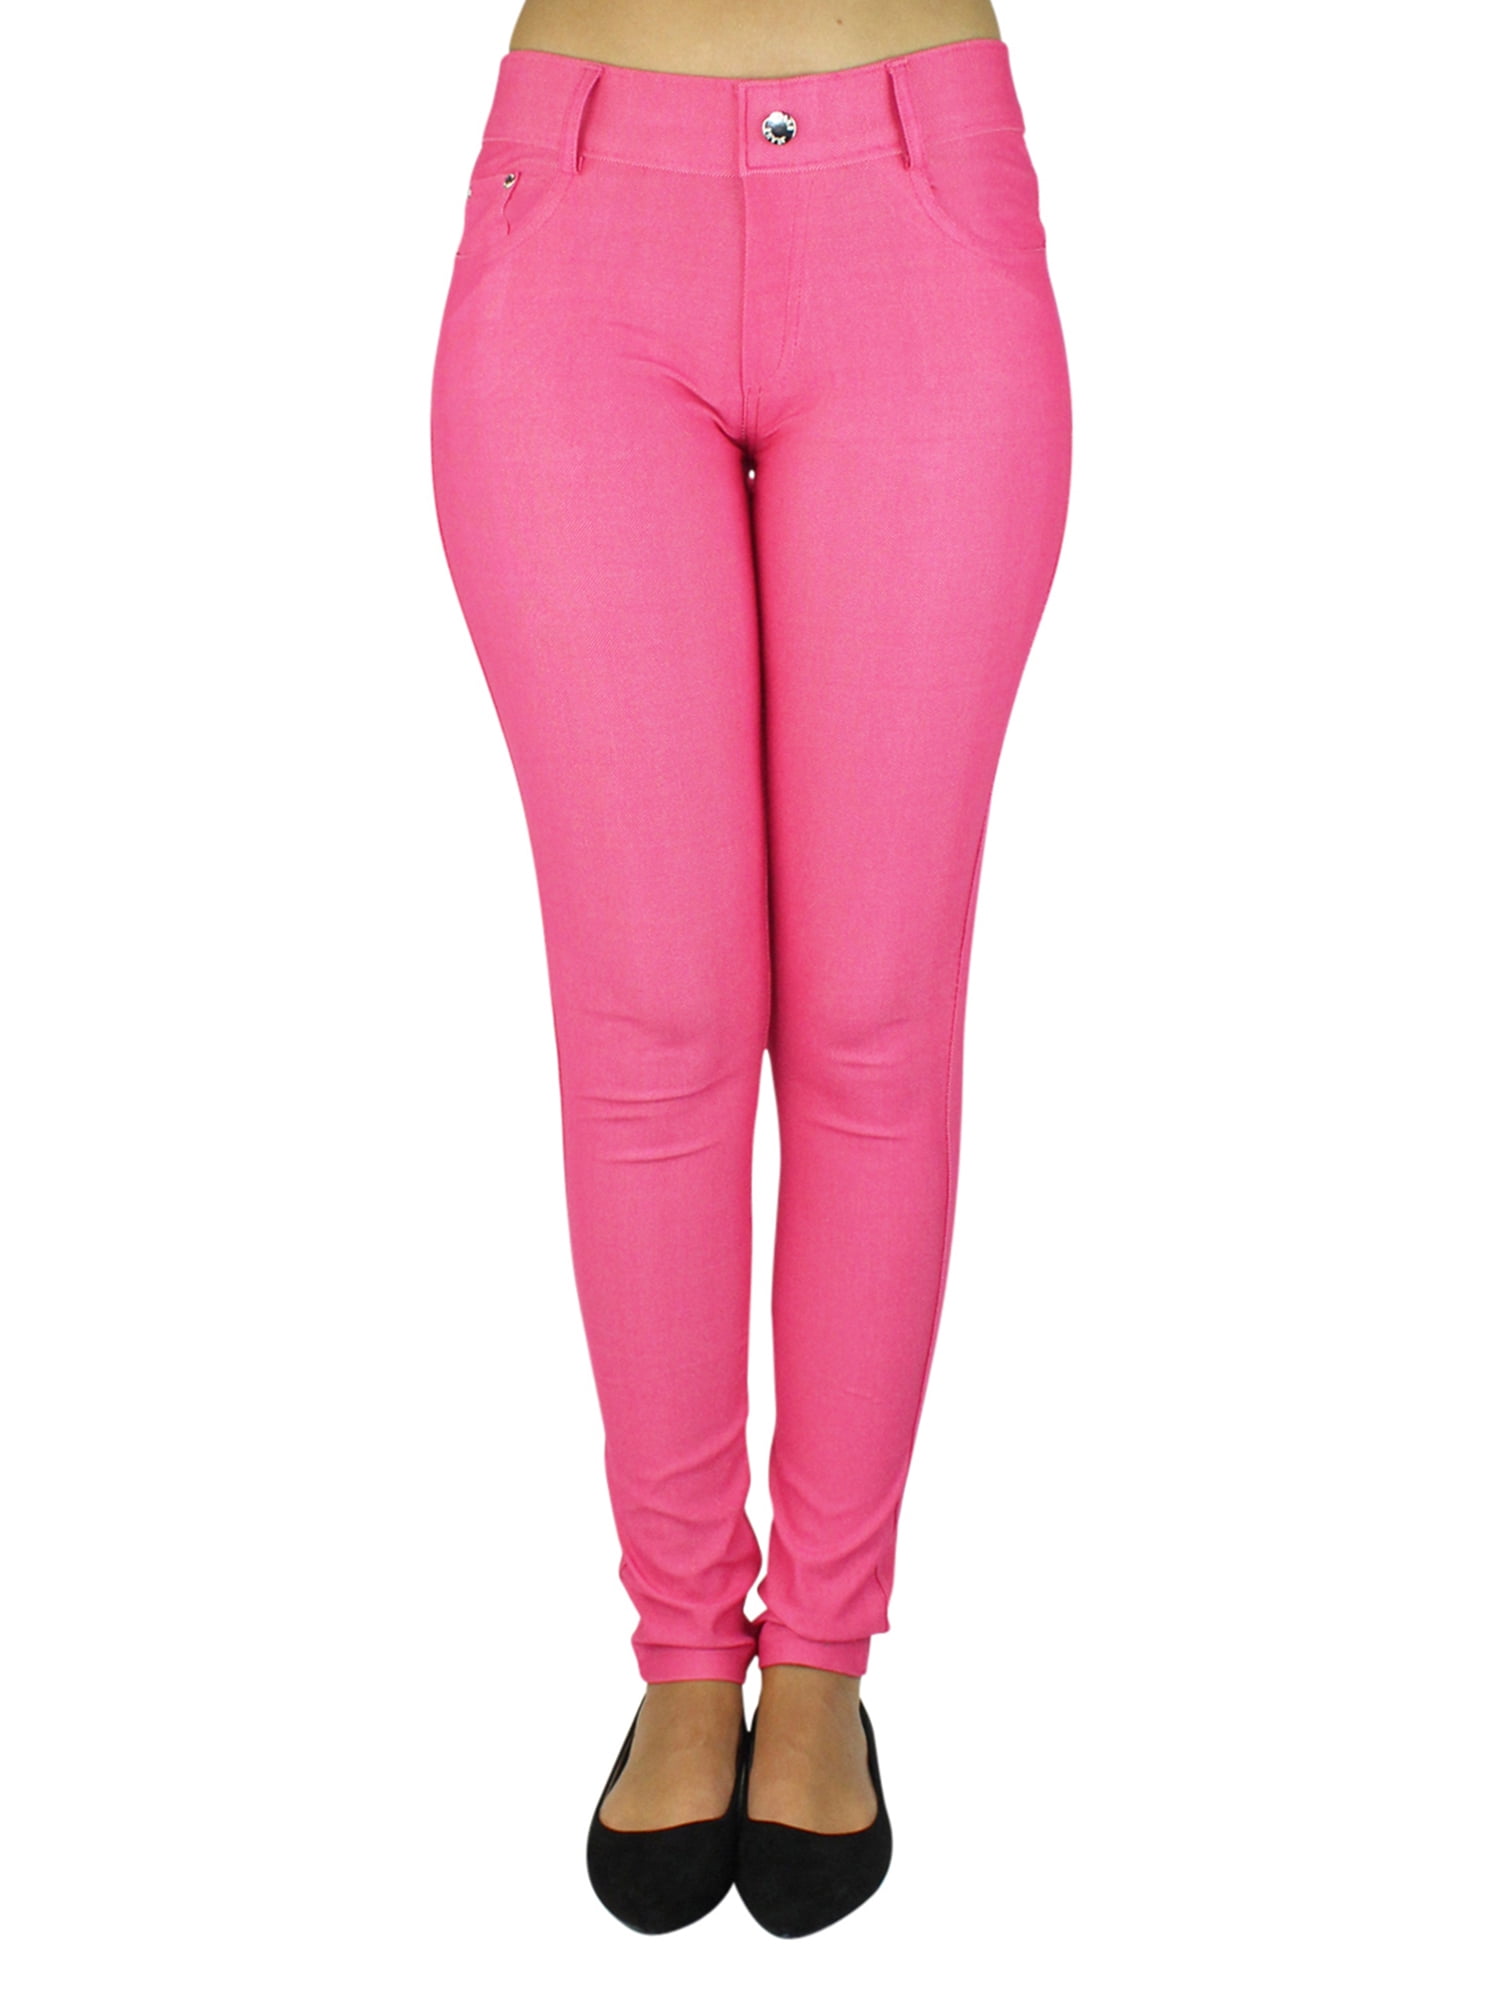 Fuchsia Hot Pink Stretchy 5 Pocket Jean Leggings Size Small/Medium ...